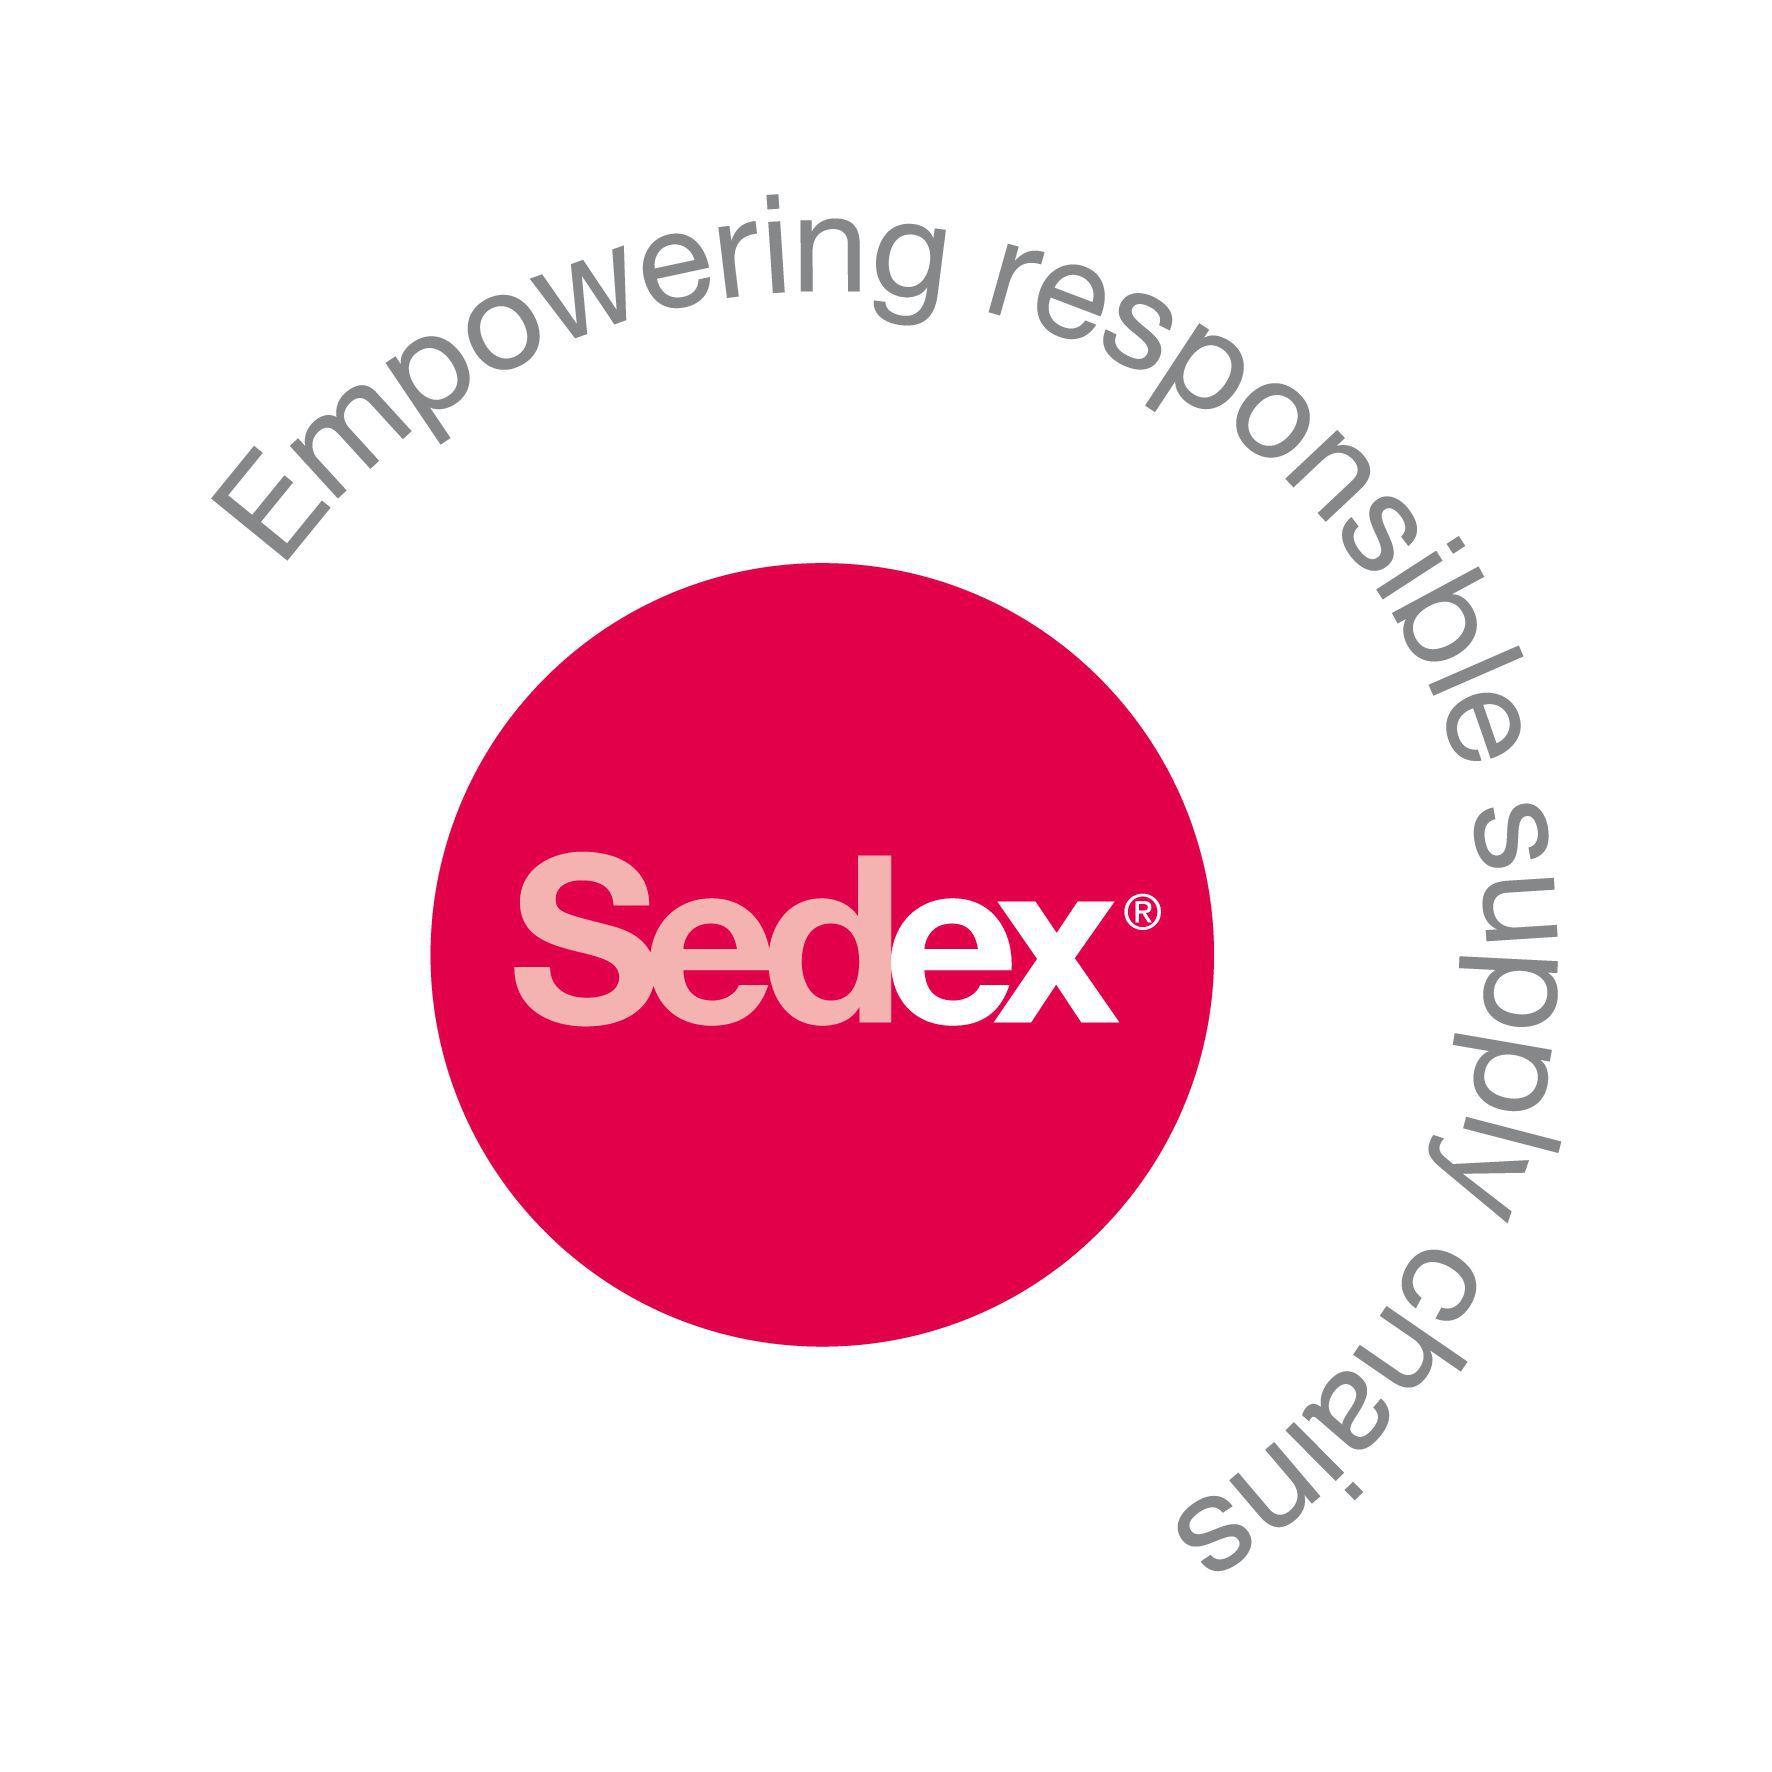 【SEDEX认证】为何客户要求工厂做SEDEX认证